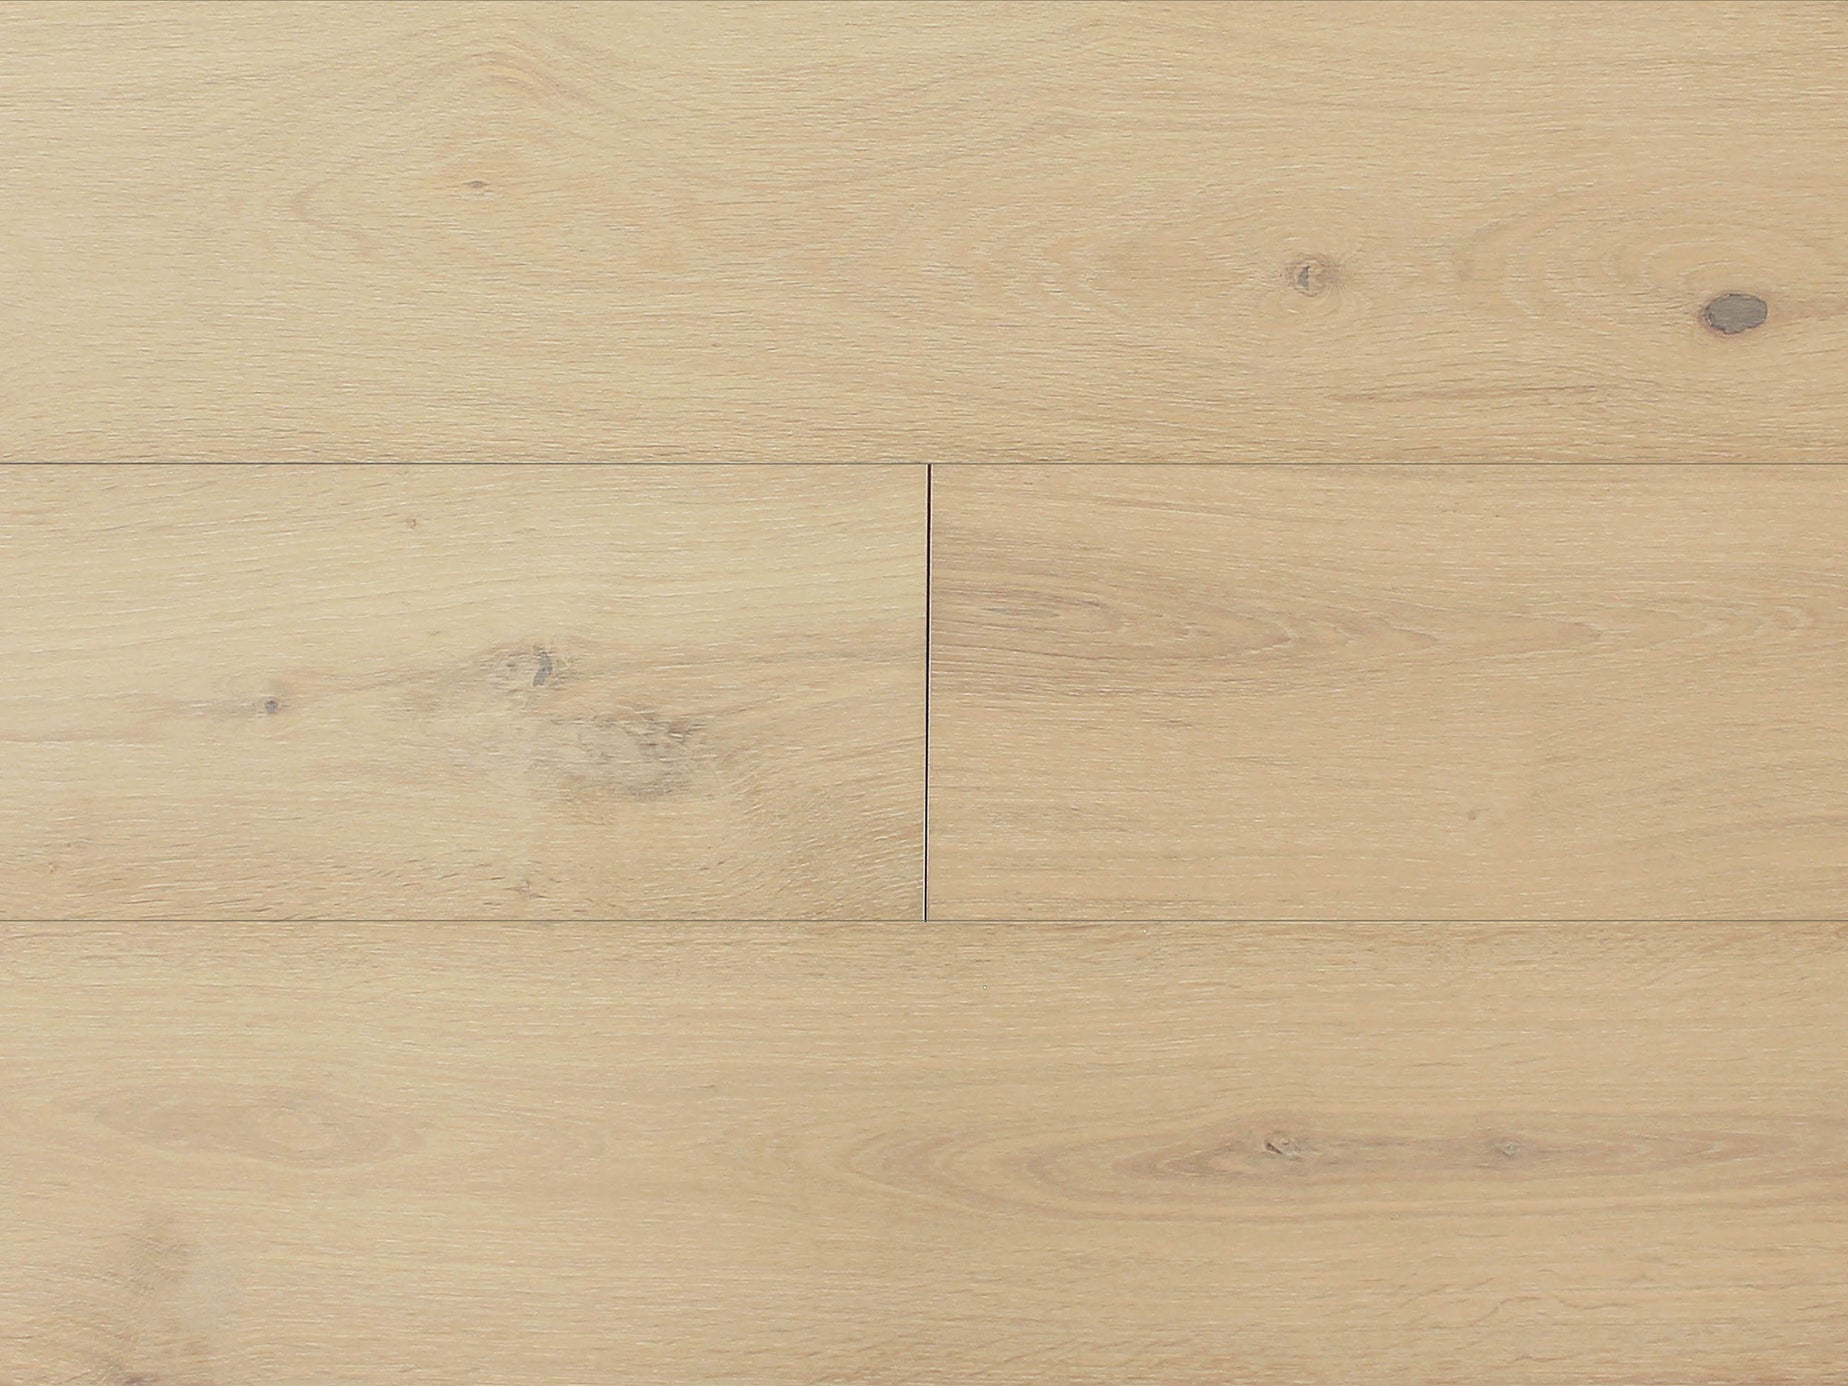 GENRE | Engineered Hardwood by Pravada Floors